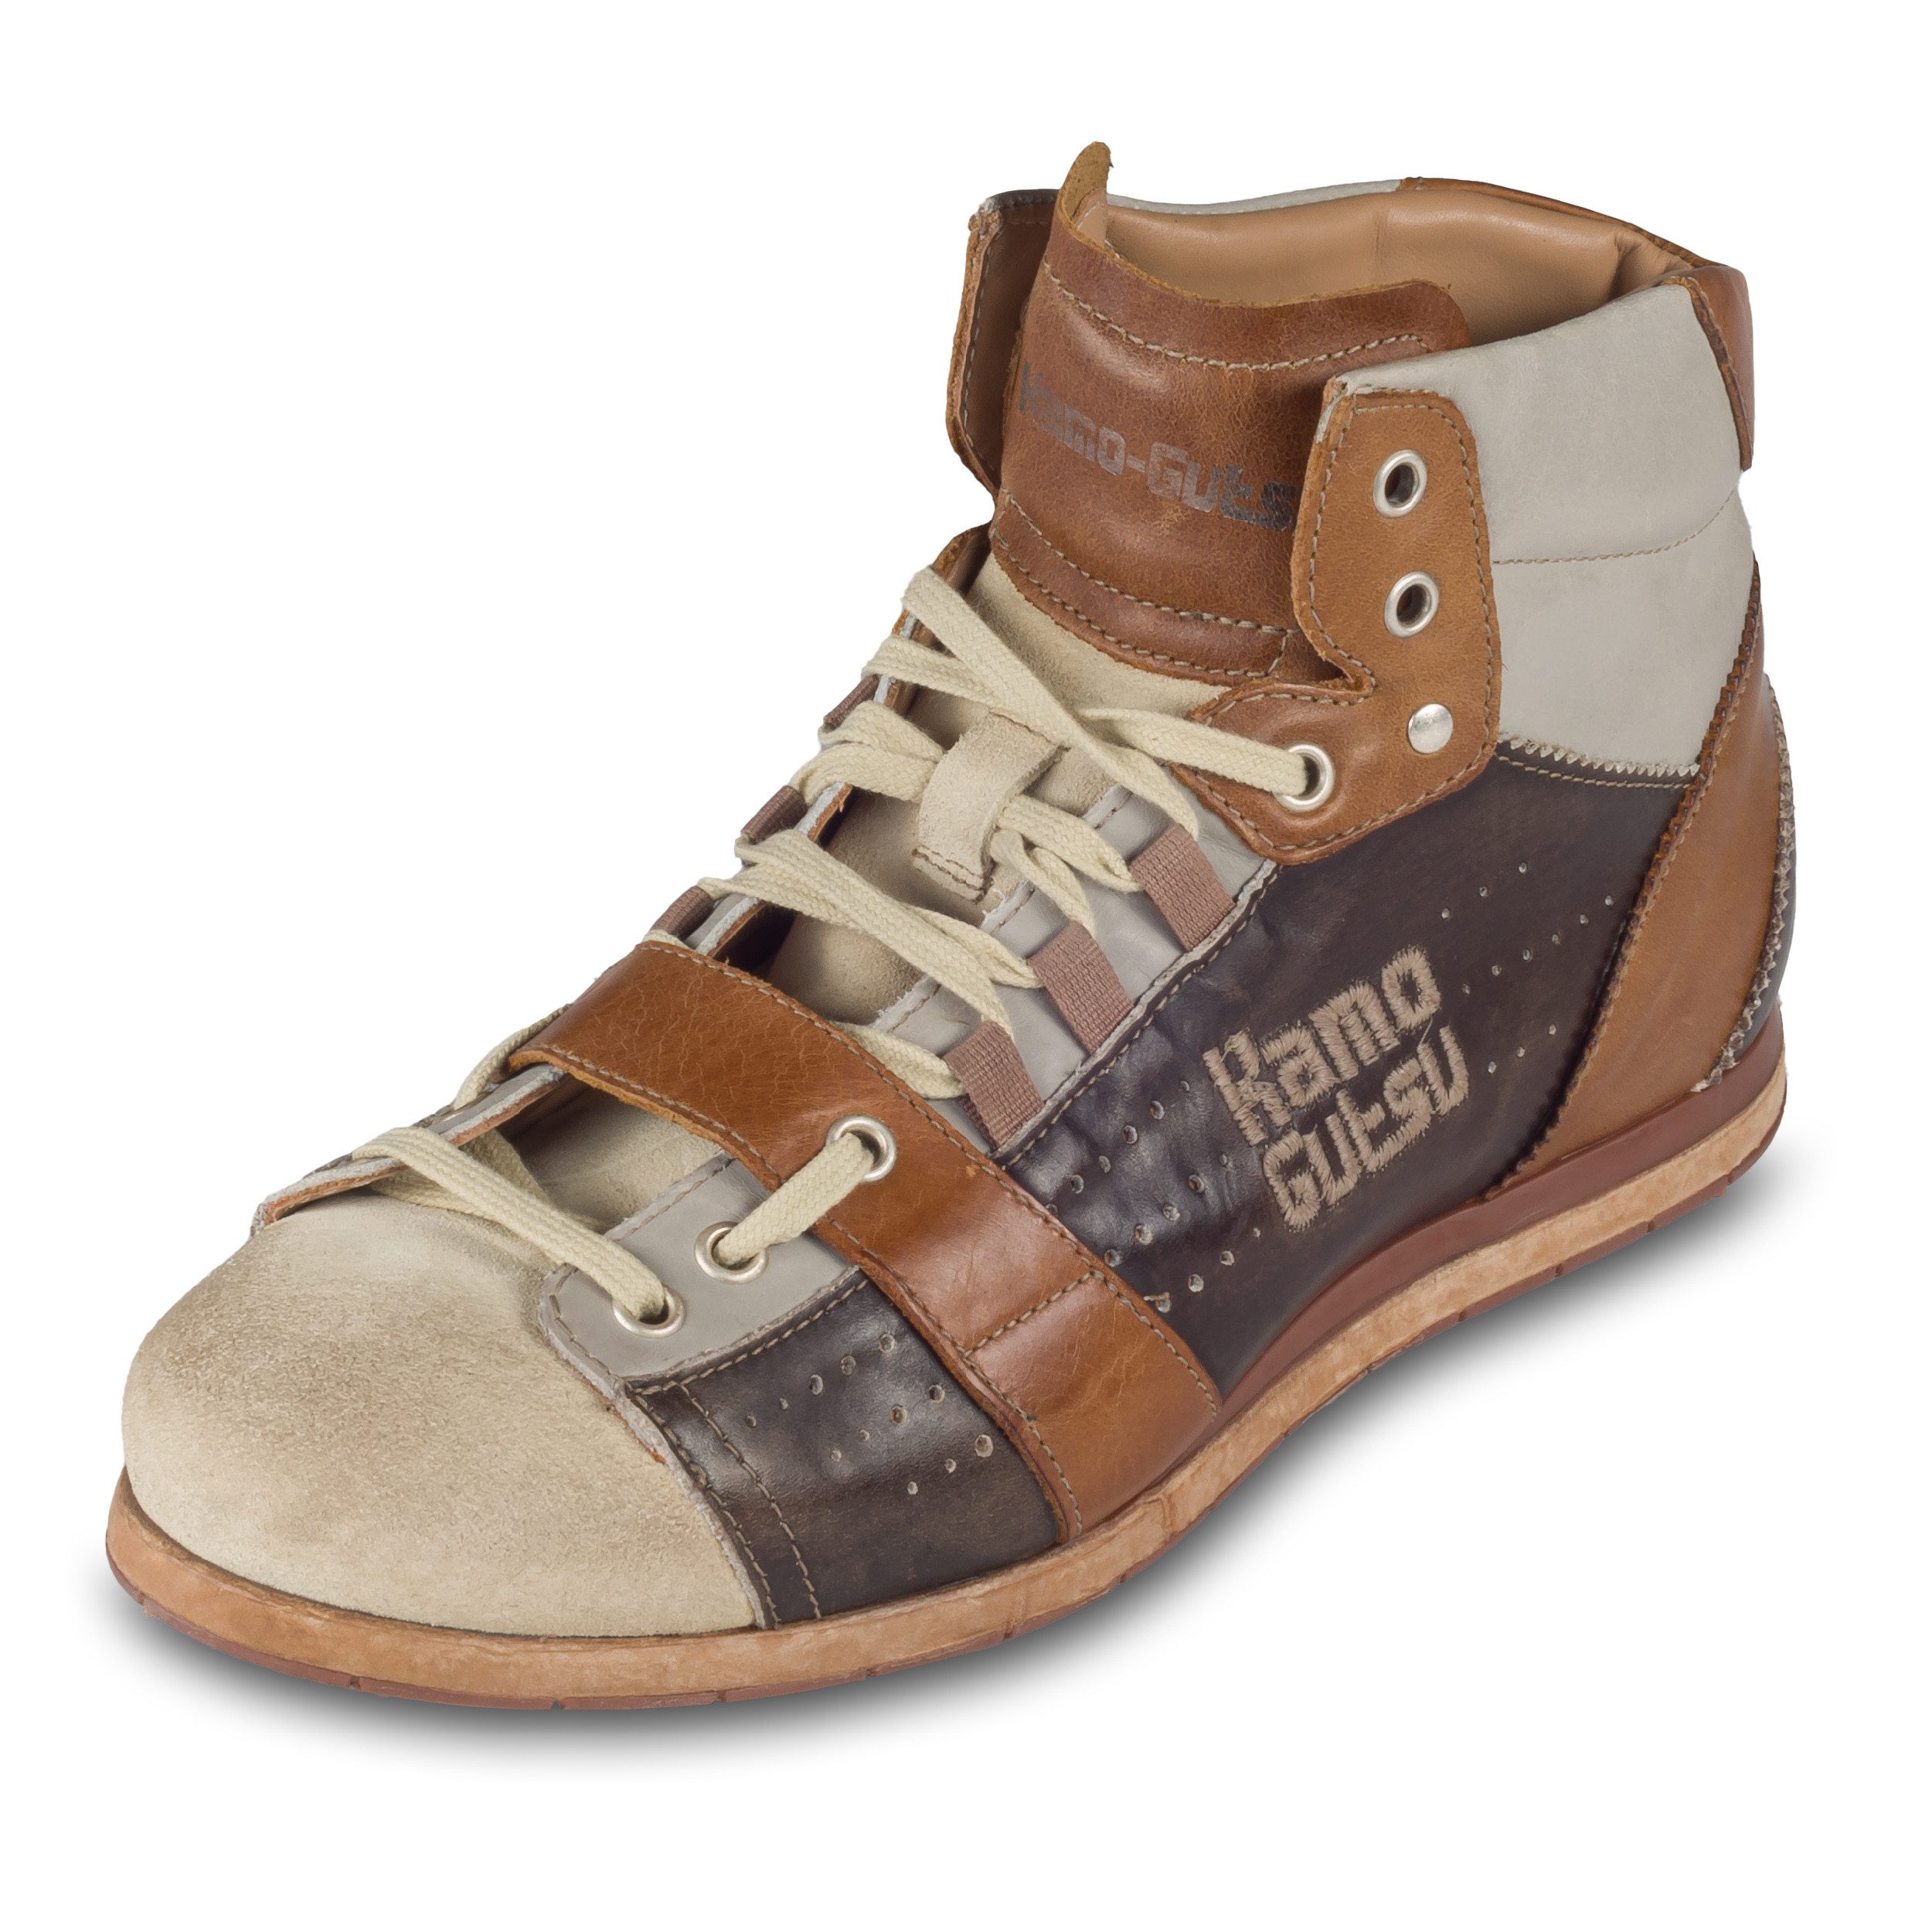 Kamo-Gutsu Leder Sneaker Stiefel, braun/beige (TIFO-105 panna pietra naturale) Sneaker Handgefertigt in Italien